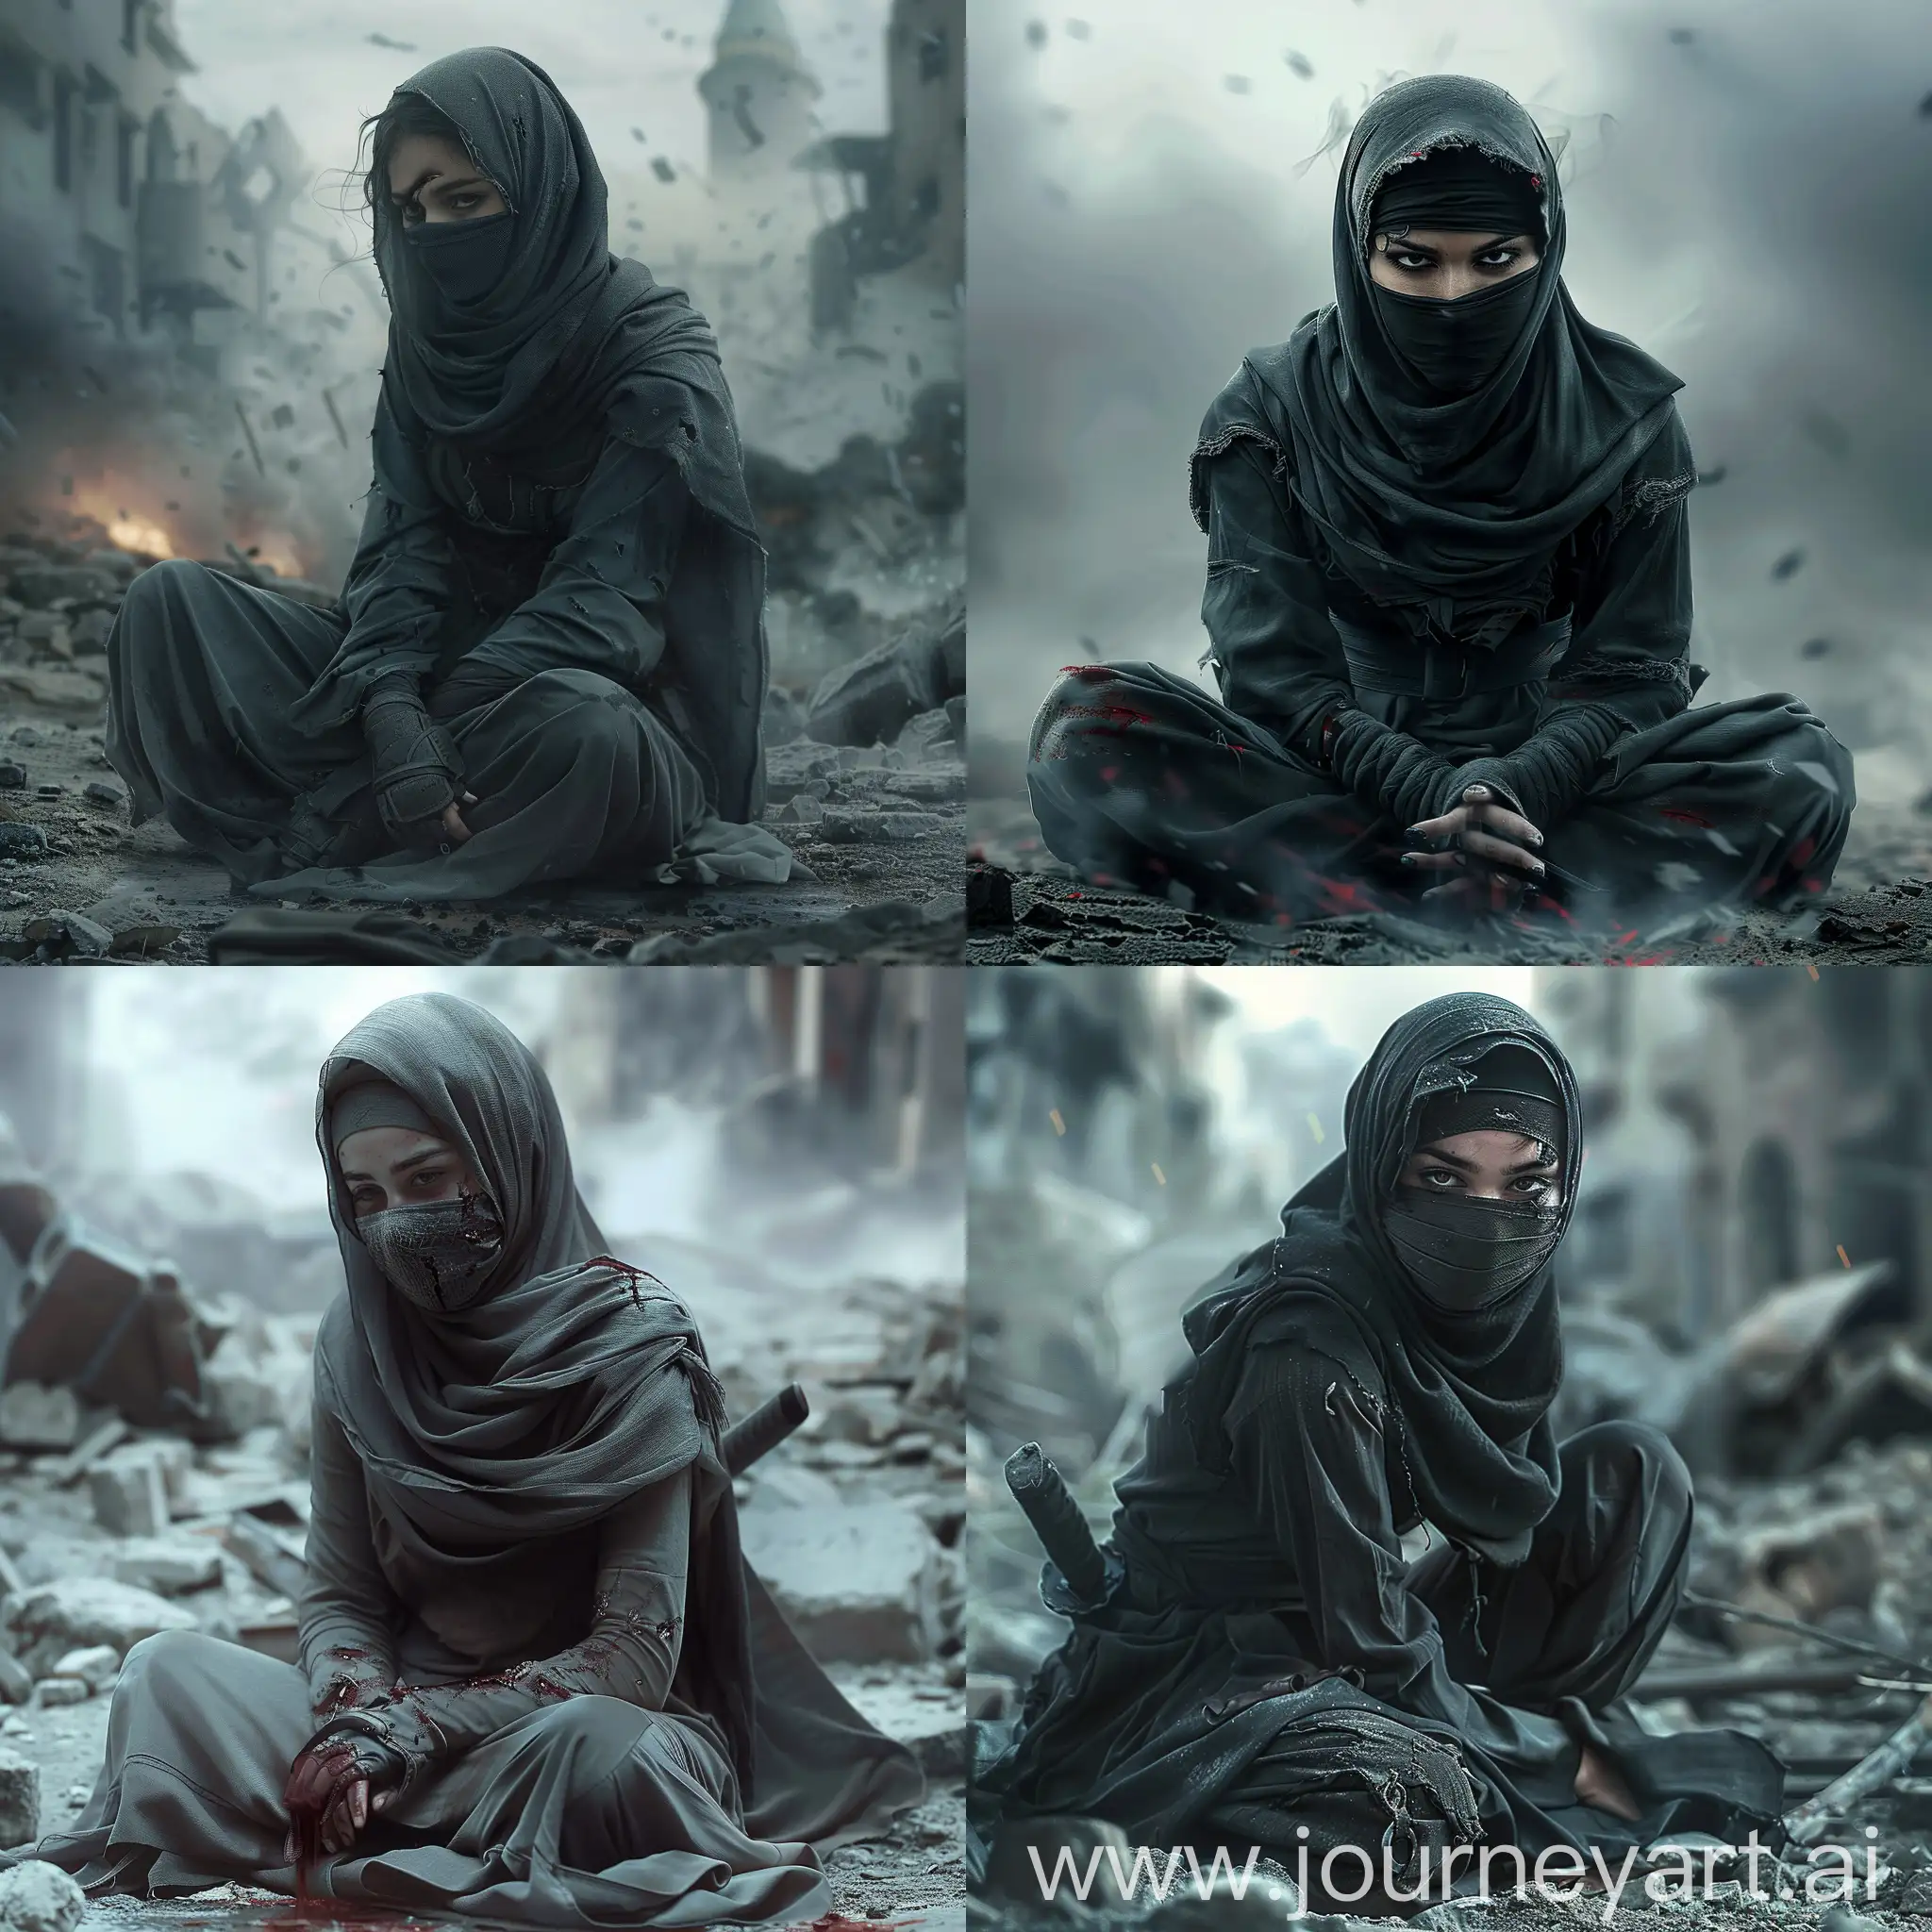 Seorang ninja wanita hijab yang terluka dengan topengnya dilepas duduk berlutut di medan perang yang tragis, rasa pedih, realisme, efek tingkat bioskop, ukuran wallpaper ponsel